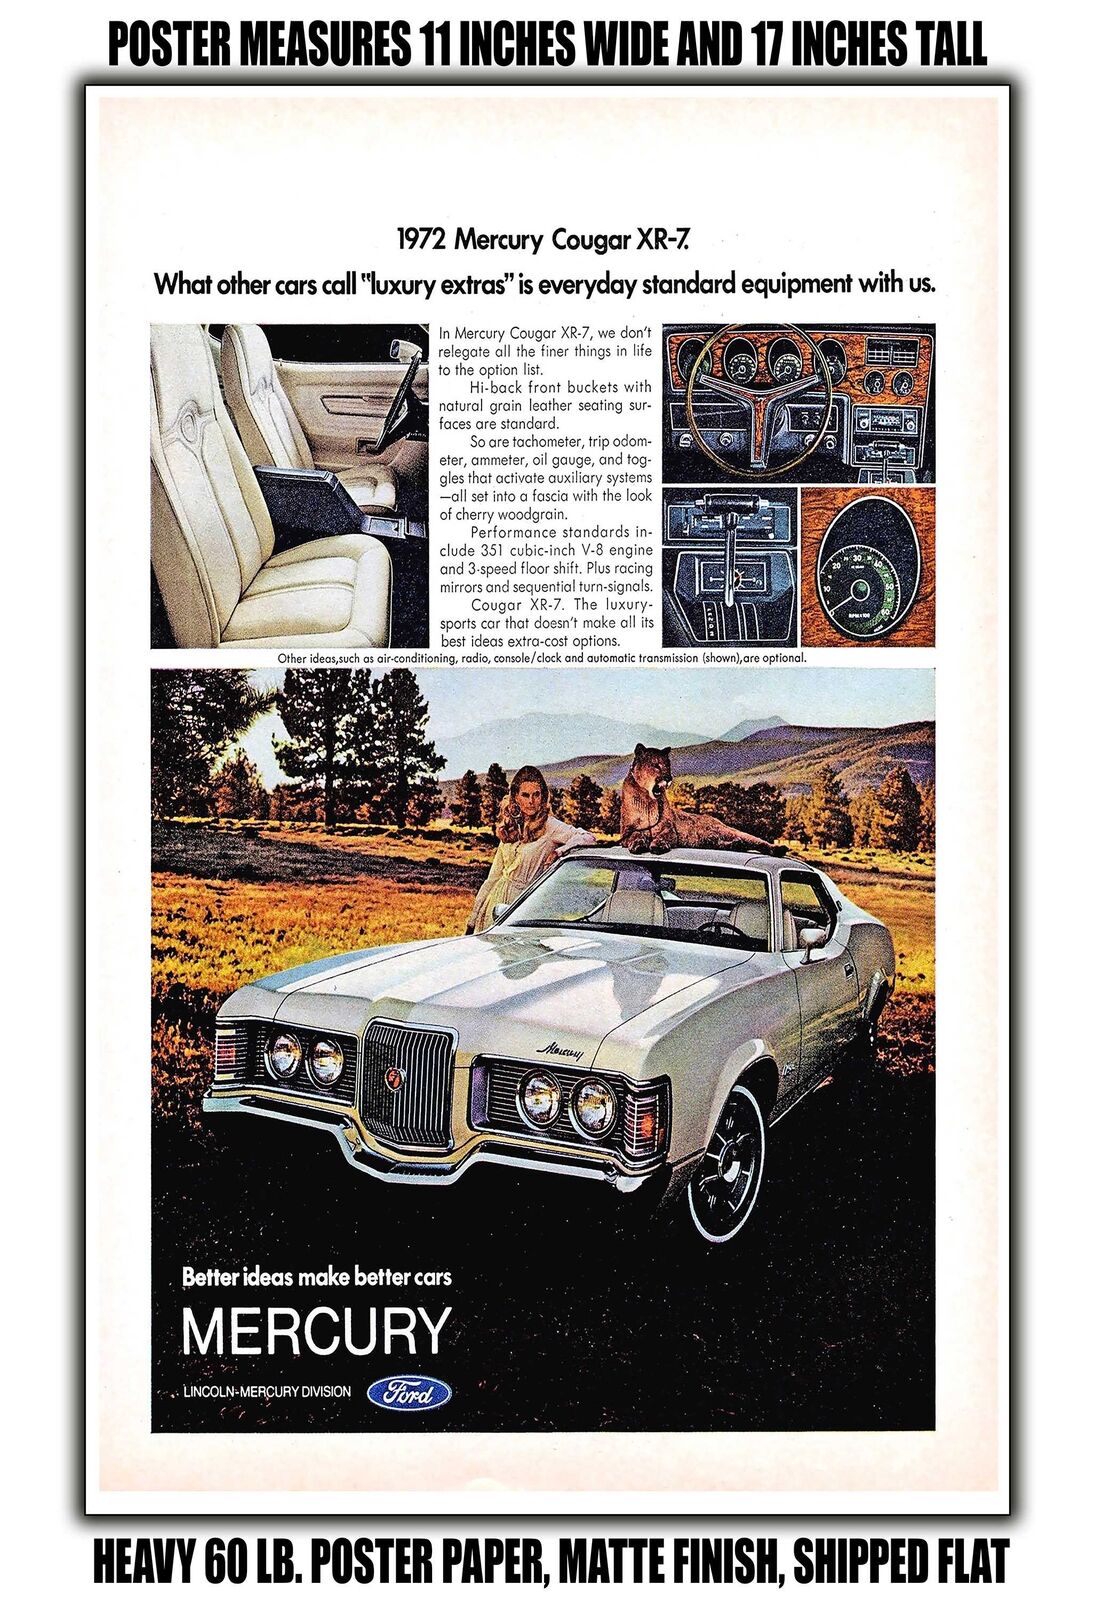 11x17 POSTER - 1972 Mercury Cougar XR7